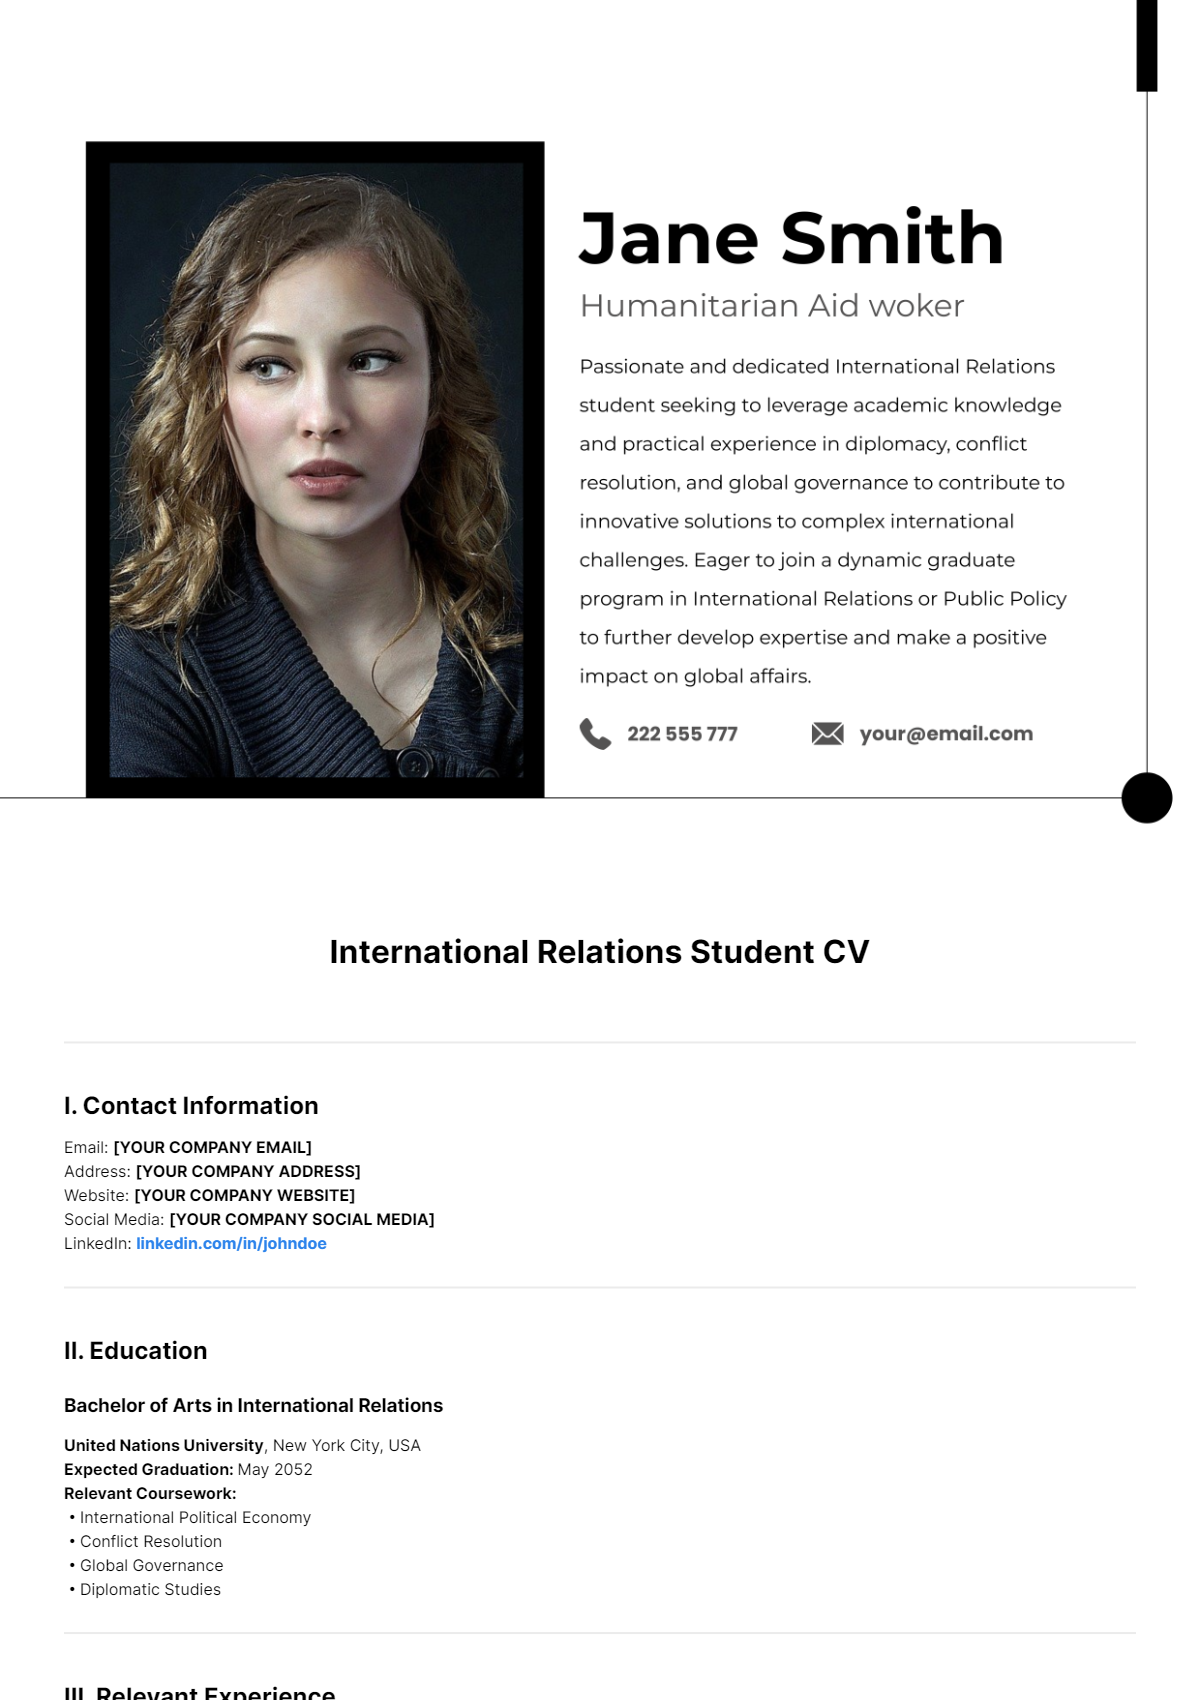 International Relations Student CV Template